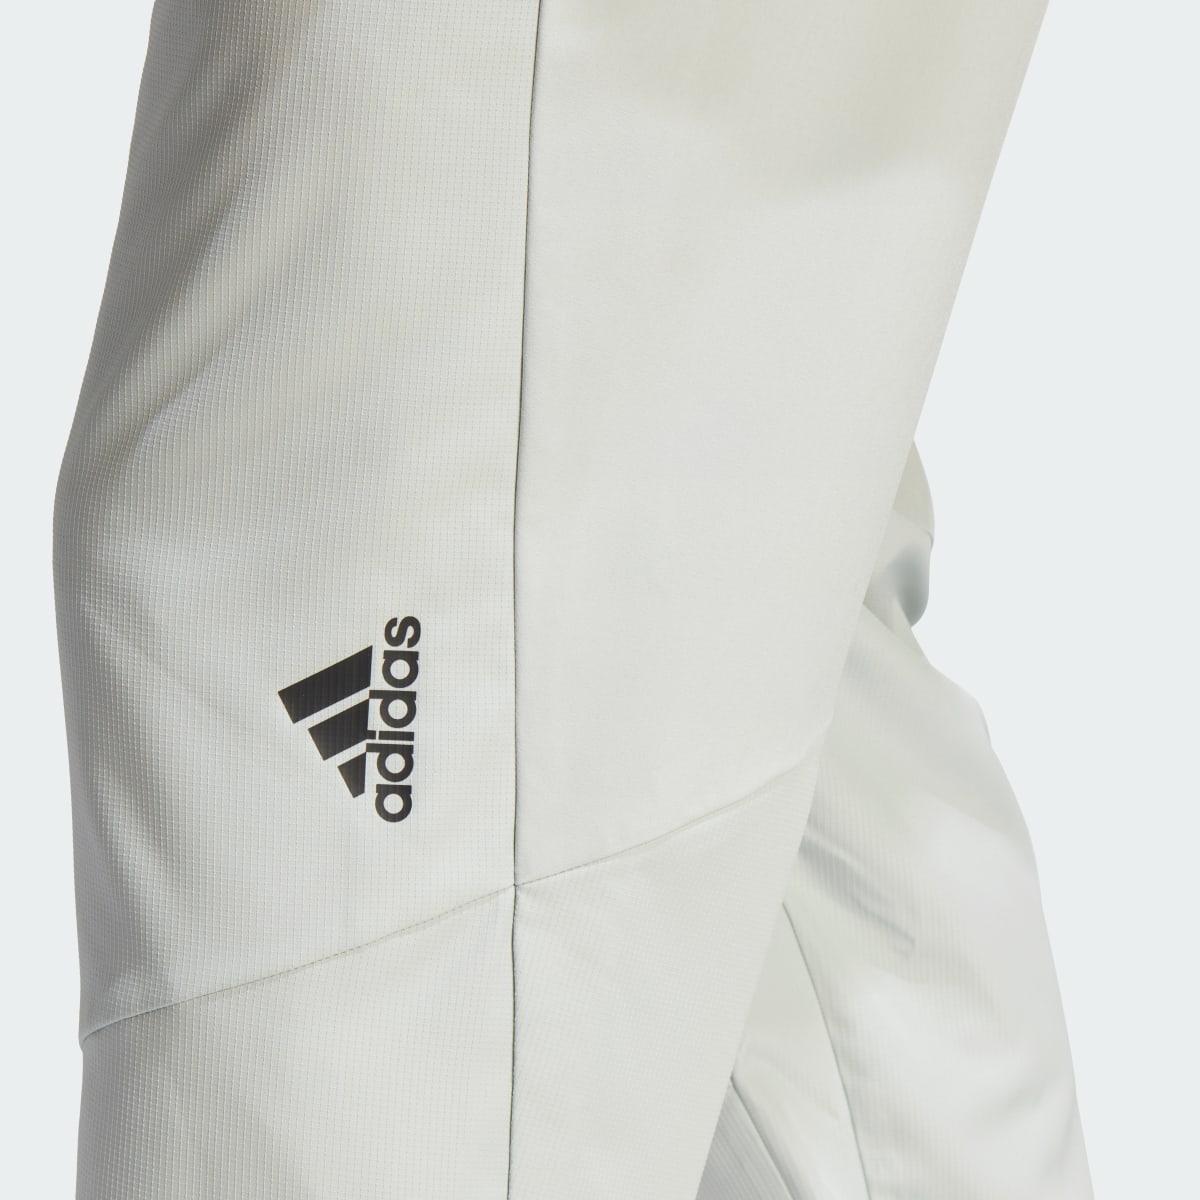 Adidas AEROREADY Designed for Movement Training Pants. 5